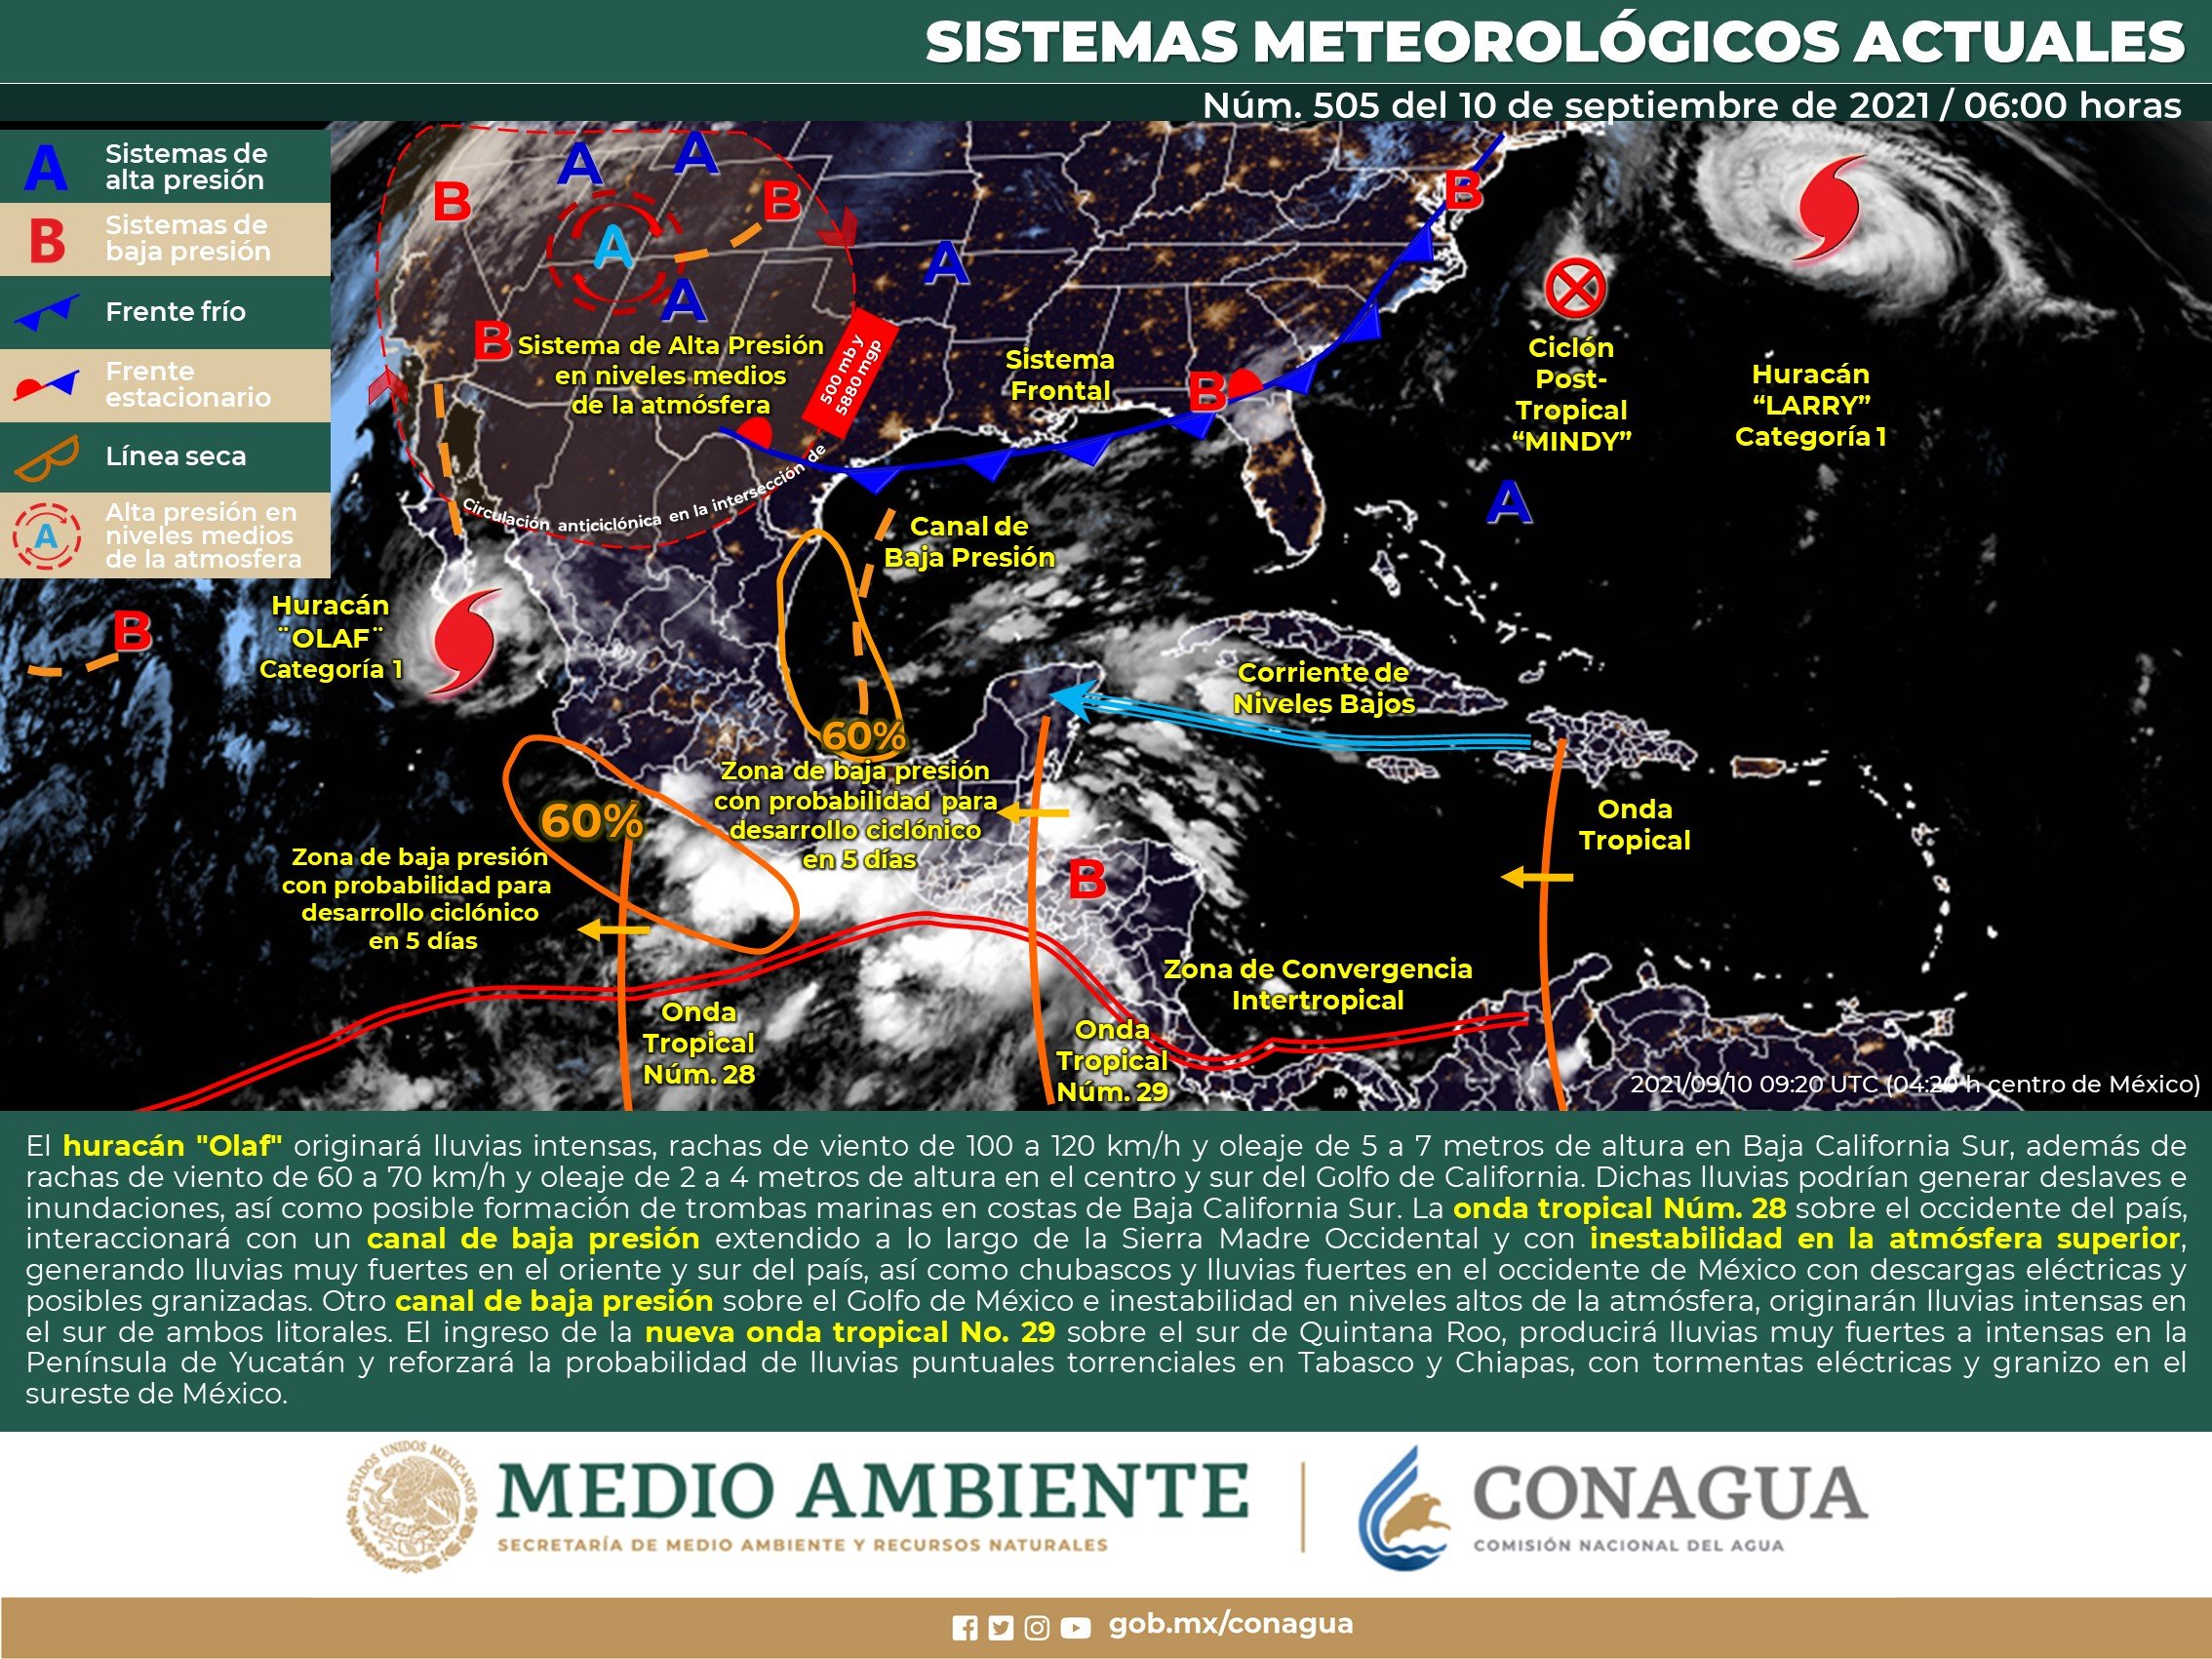 Clima en Quintana Roo: onda tropical No. 29 provocará lluvias en el Estado